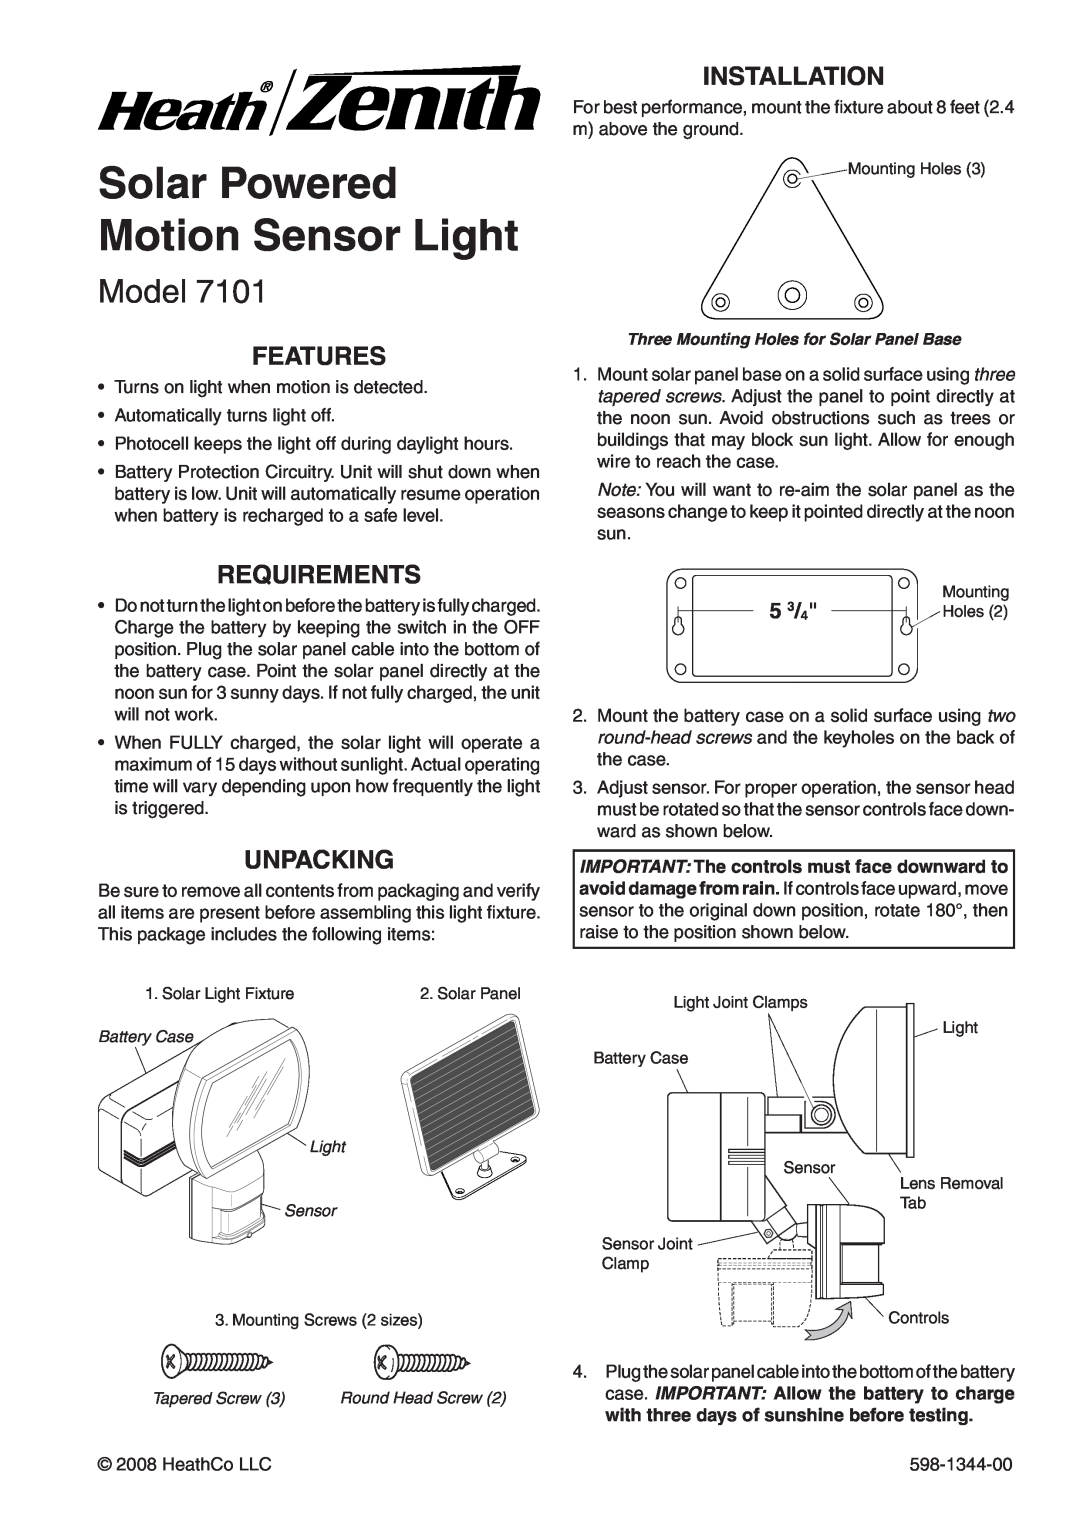 Heath Zenith 7101 manual Solar Powered Motion Sensor Light, Model, Features, Requirements, Unpacking, Installation 